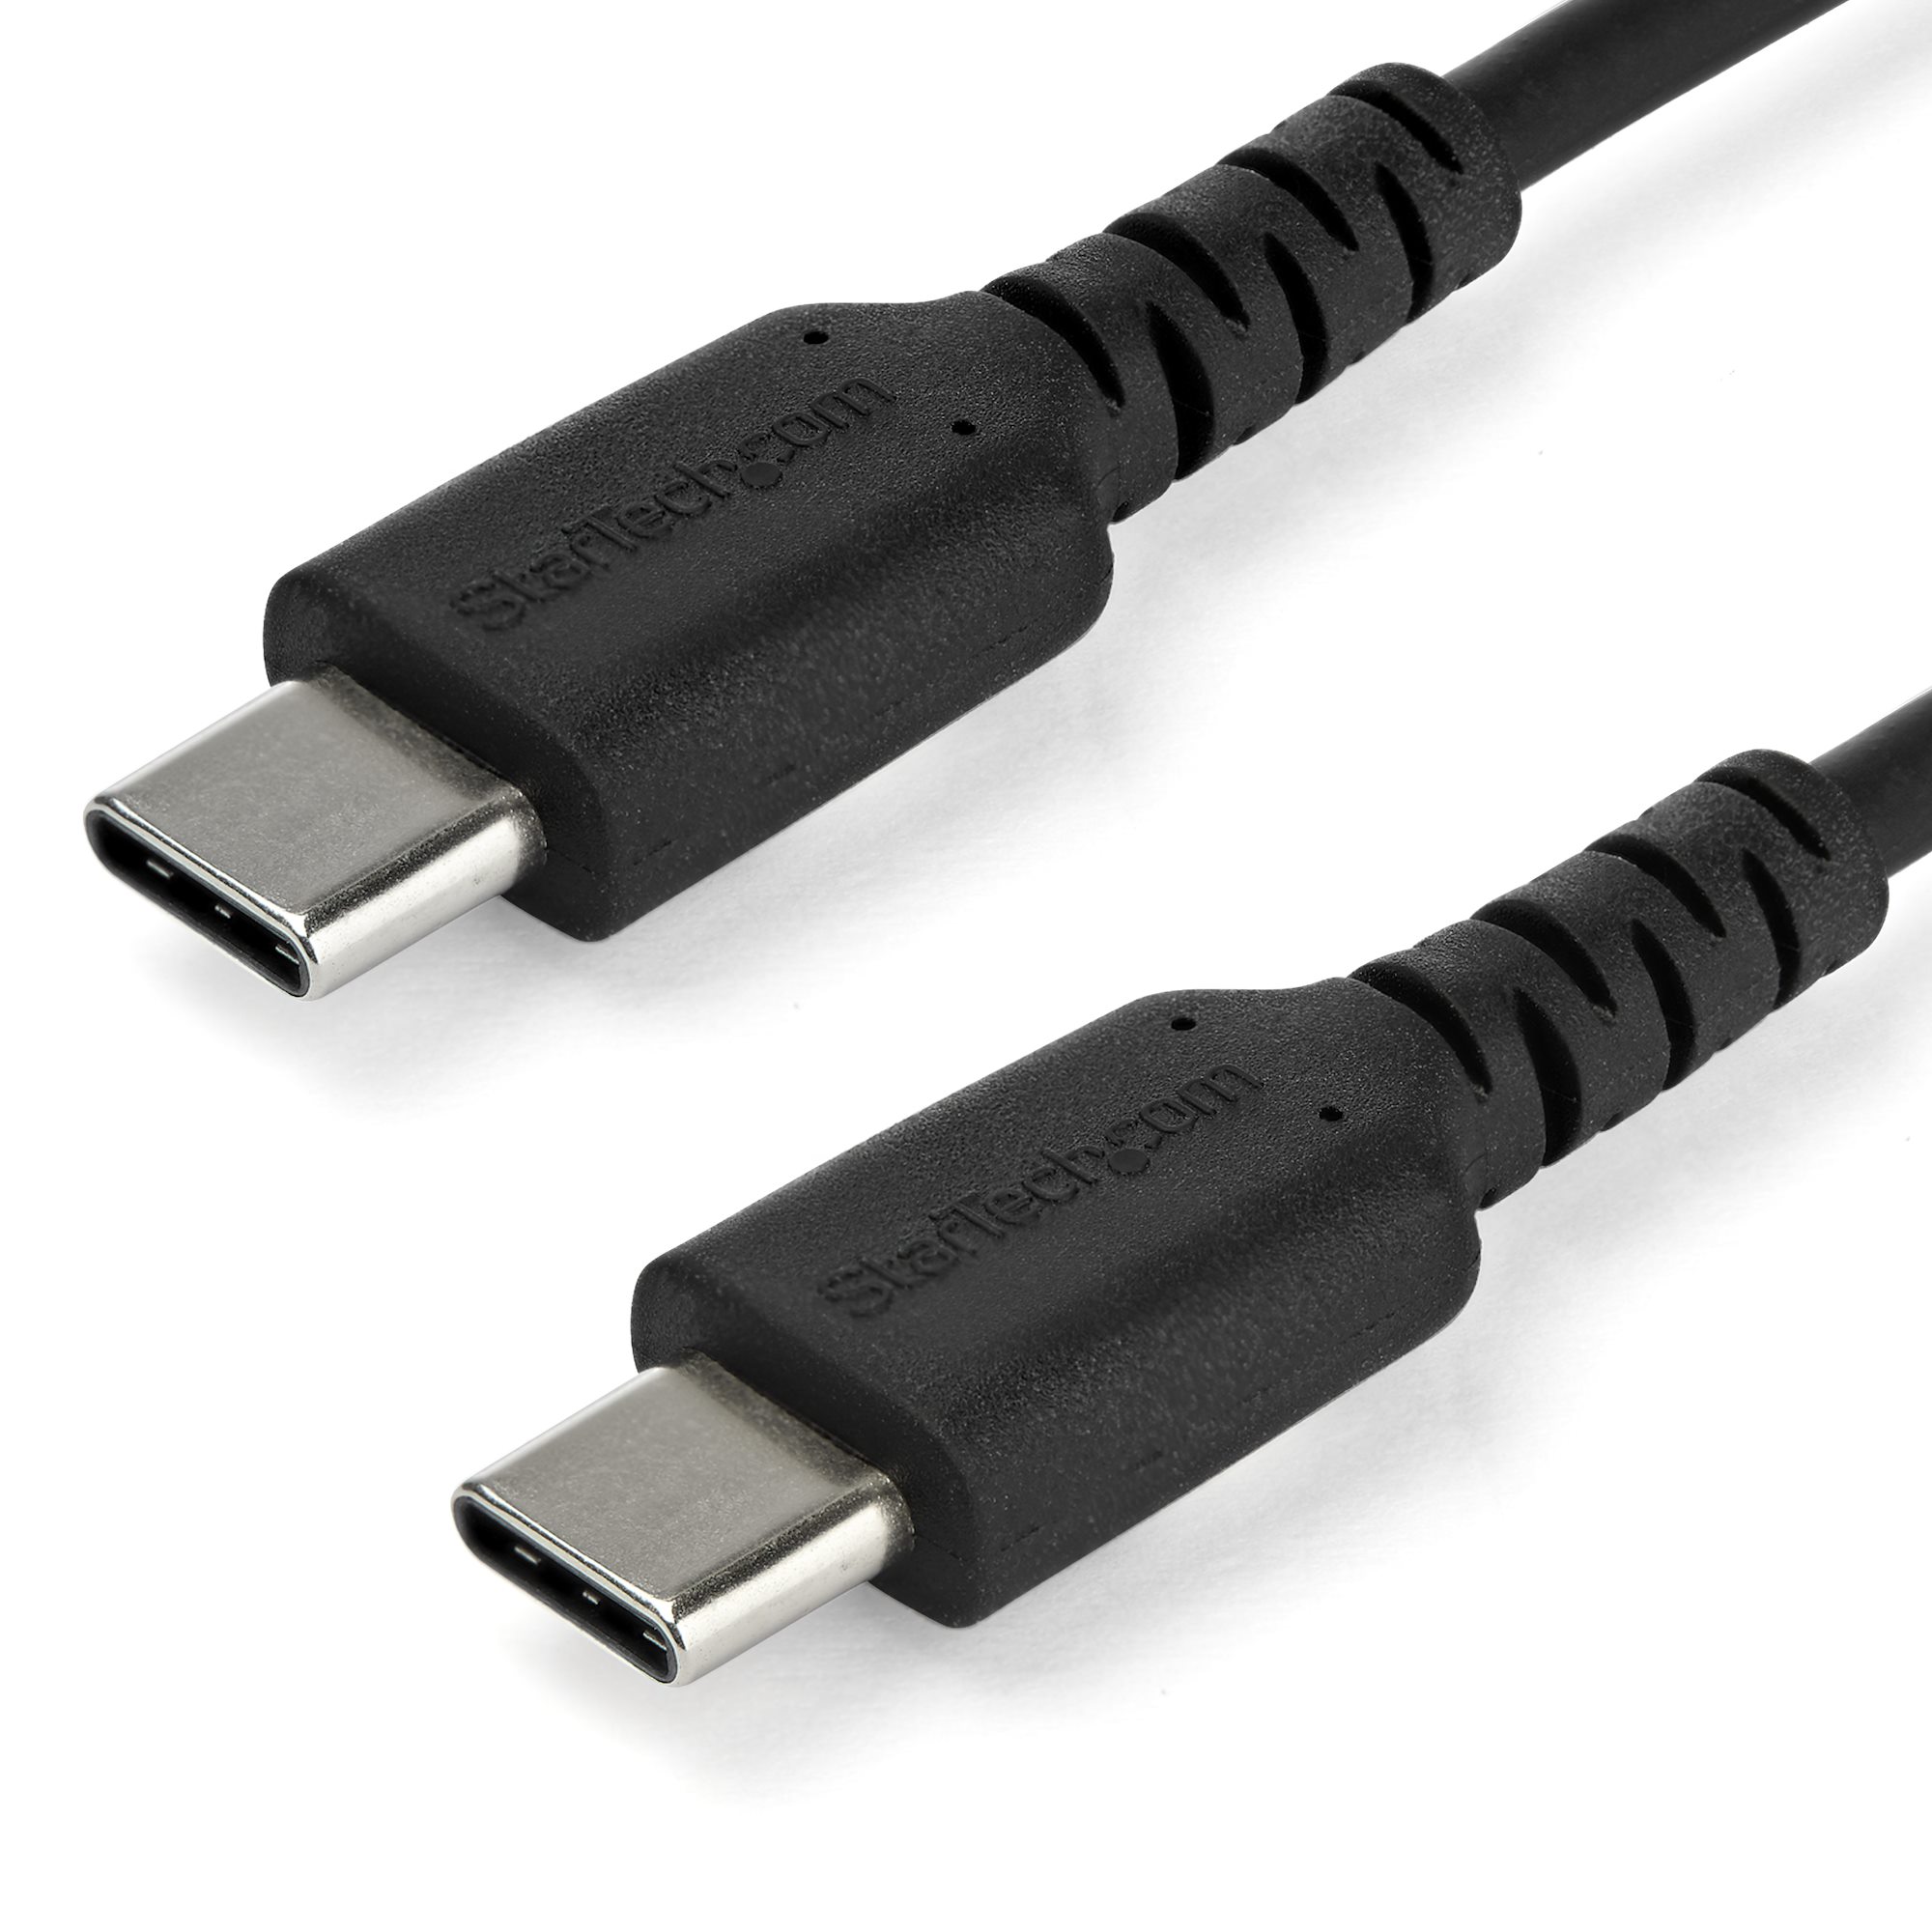 2m USB Charging Cord 60W - USB-C Cables |